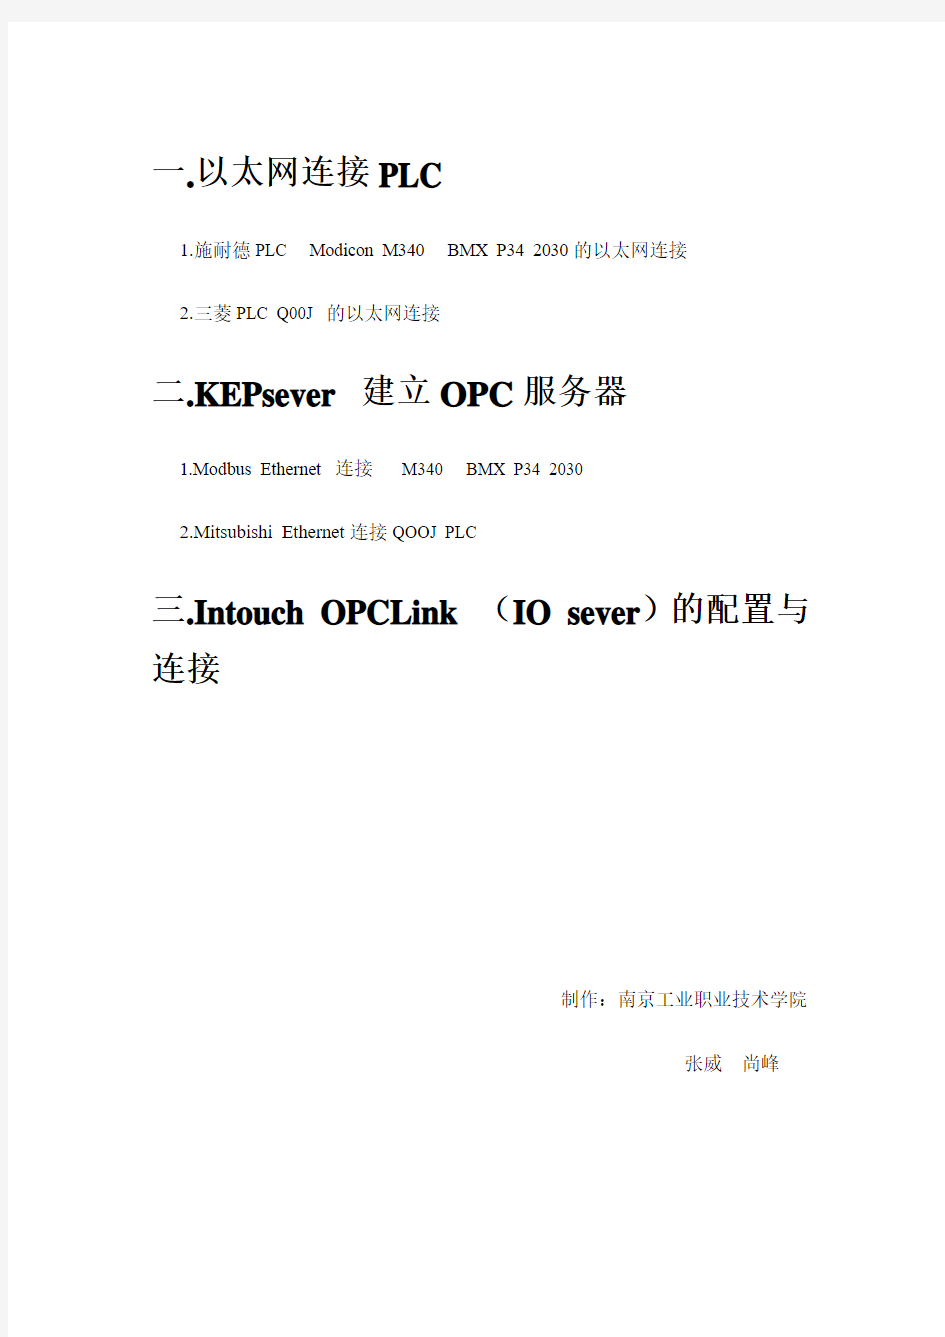 opc服务器KEPsever的应用例子施耐德三菱PLC的连接